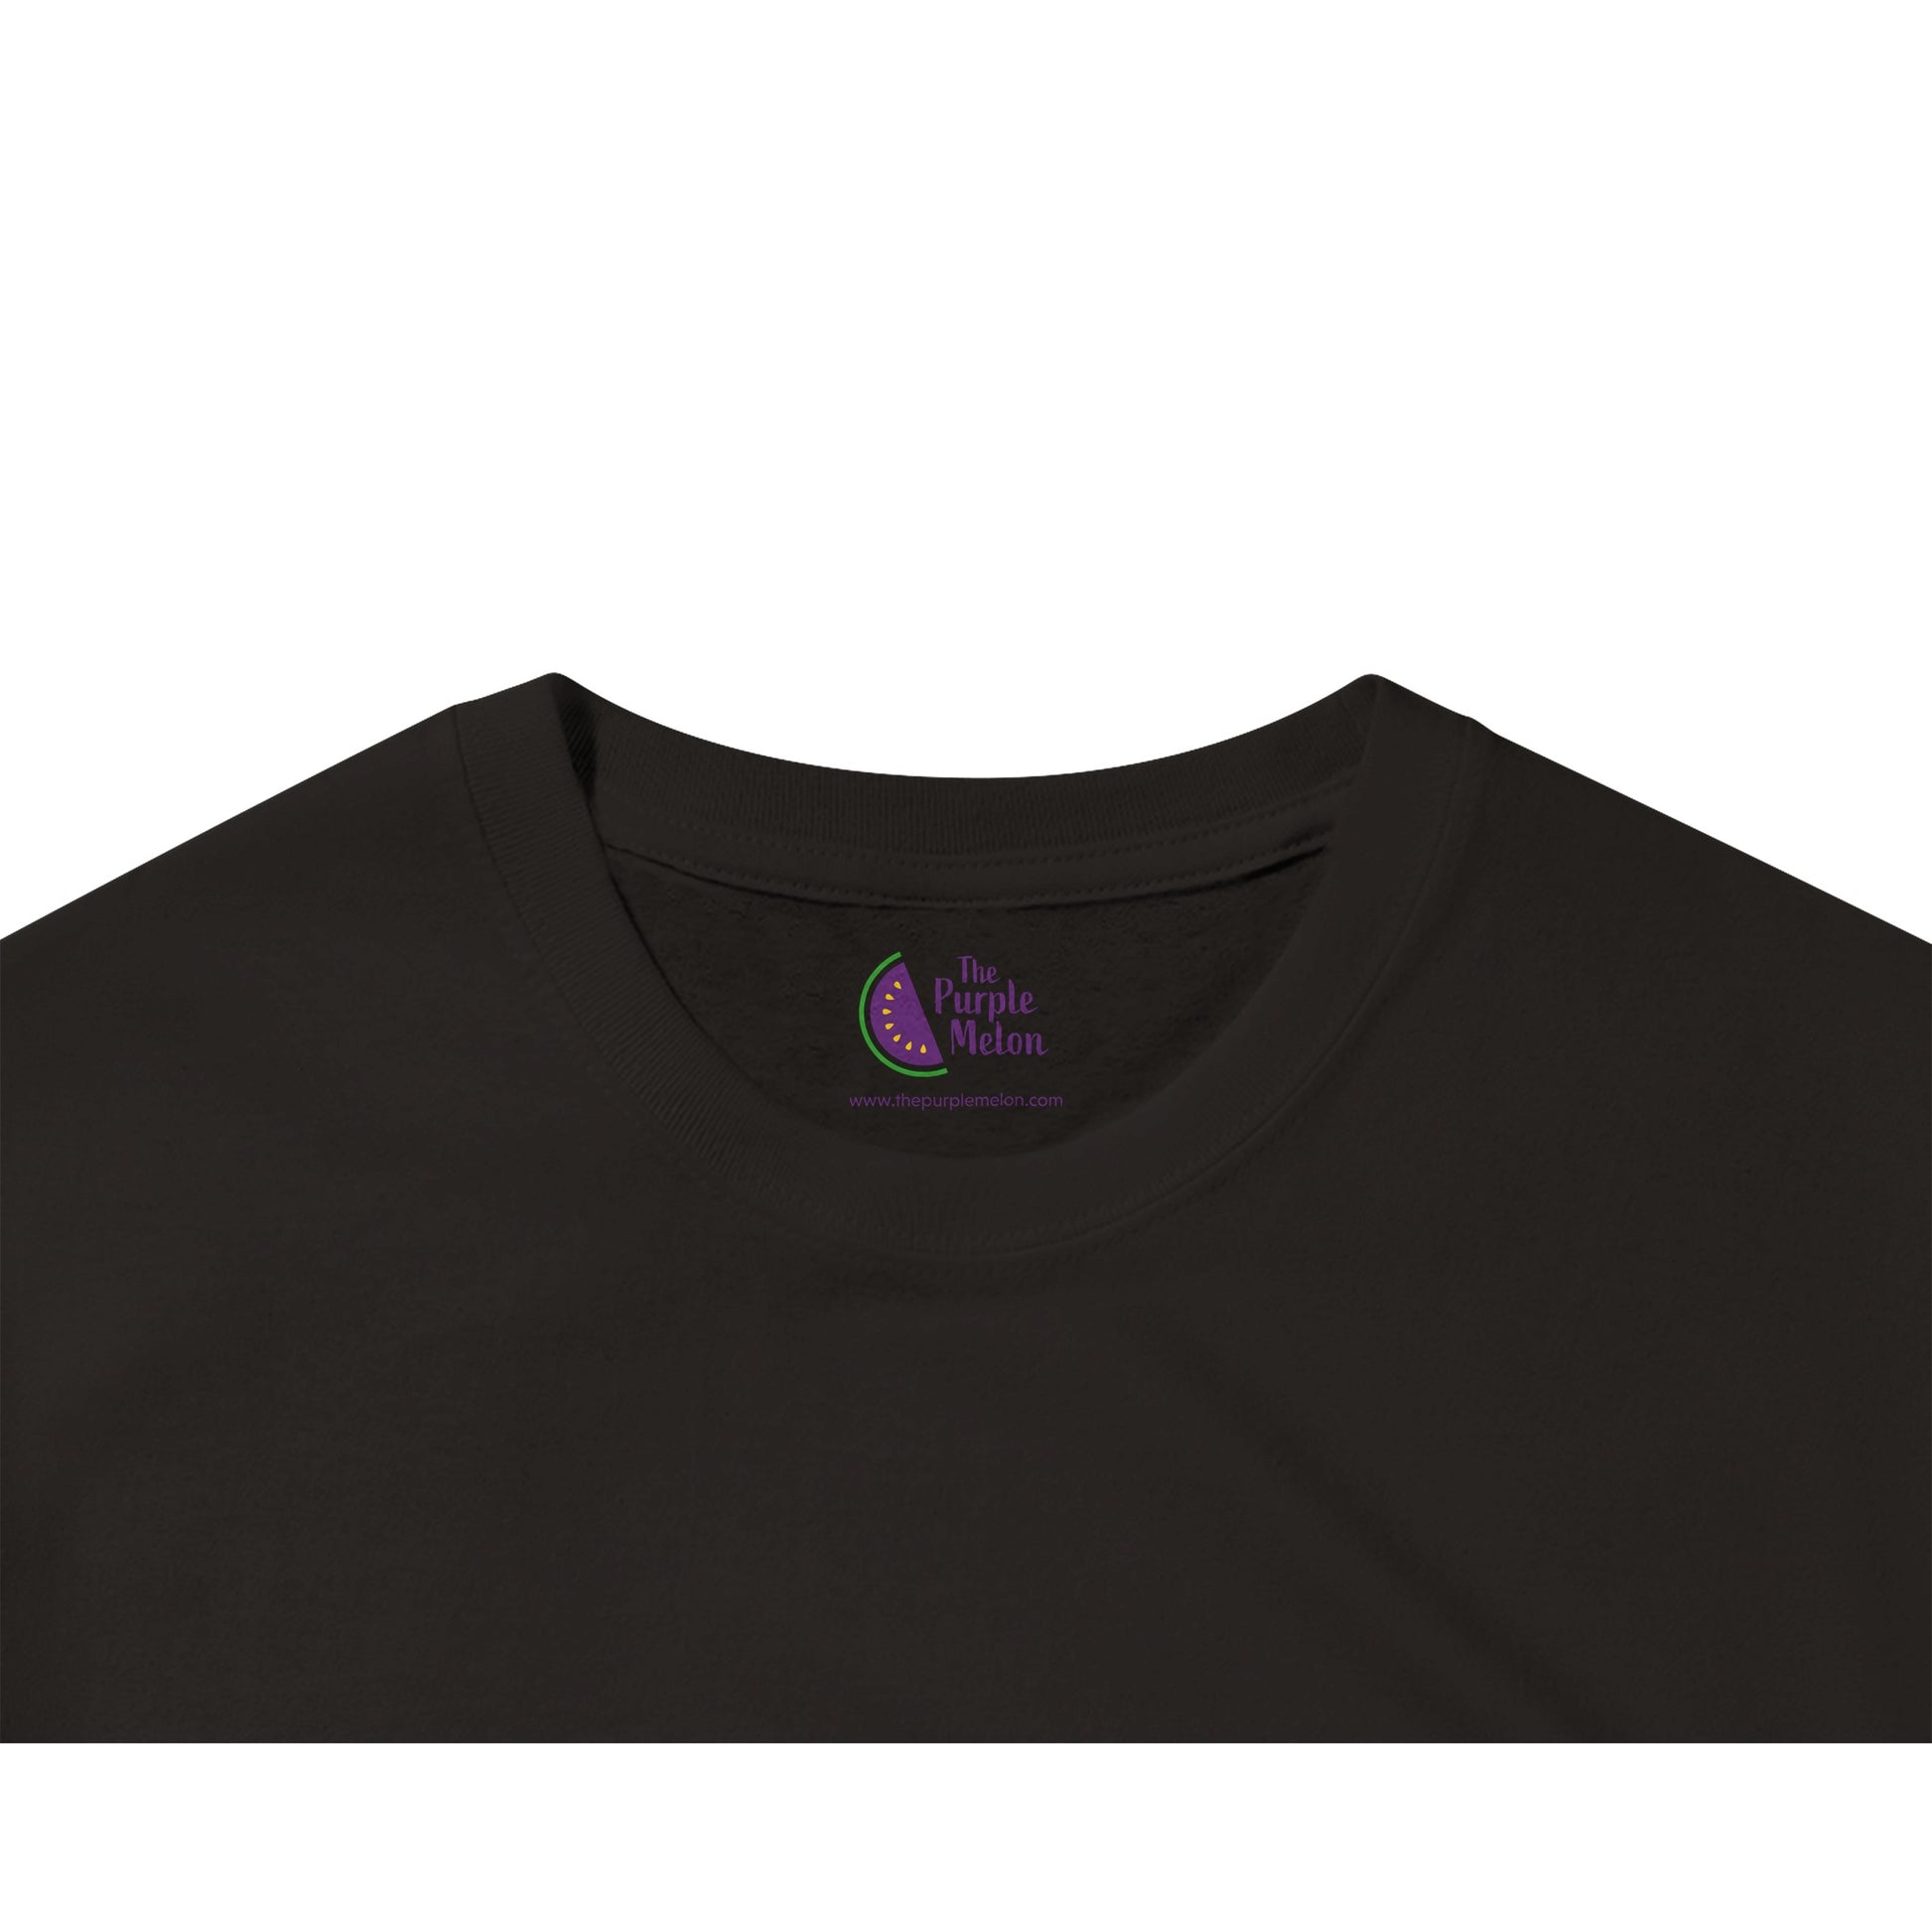 blackk t-shirt neck label with The Purple Melon logo